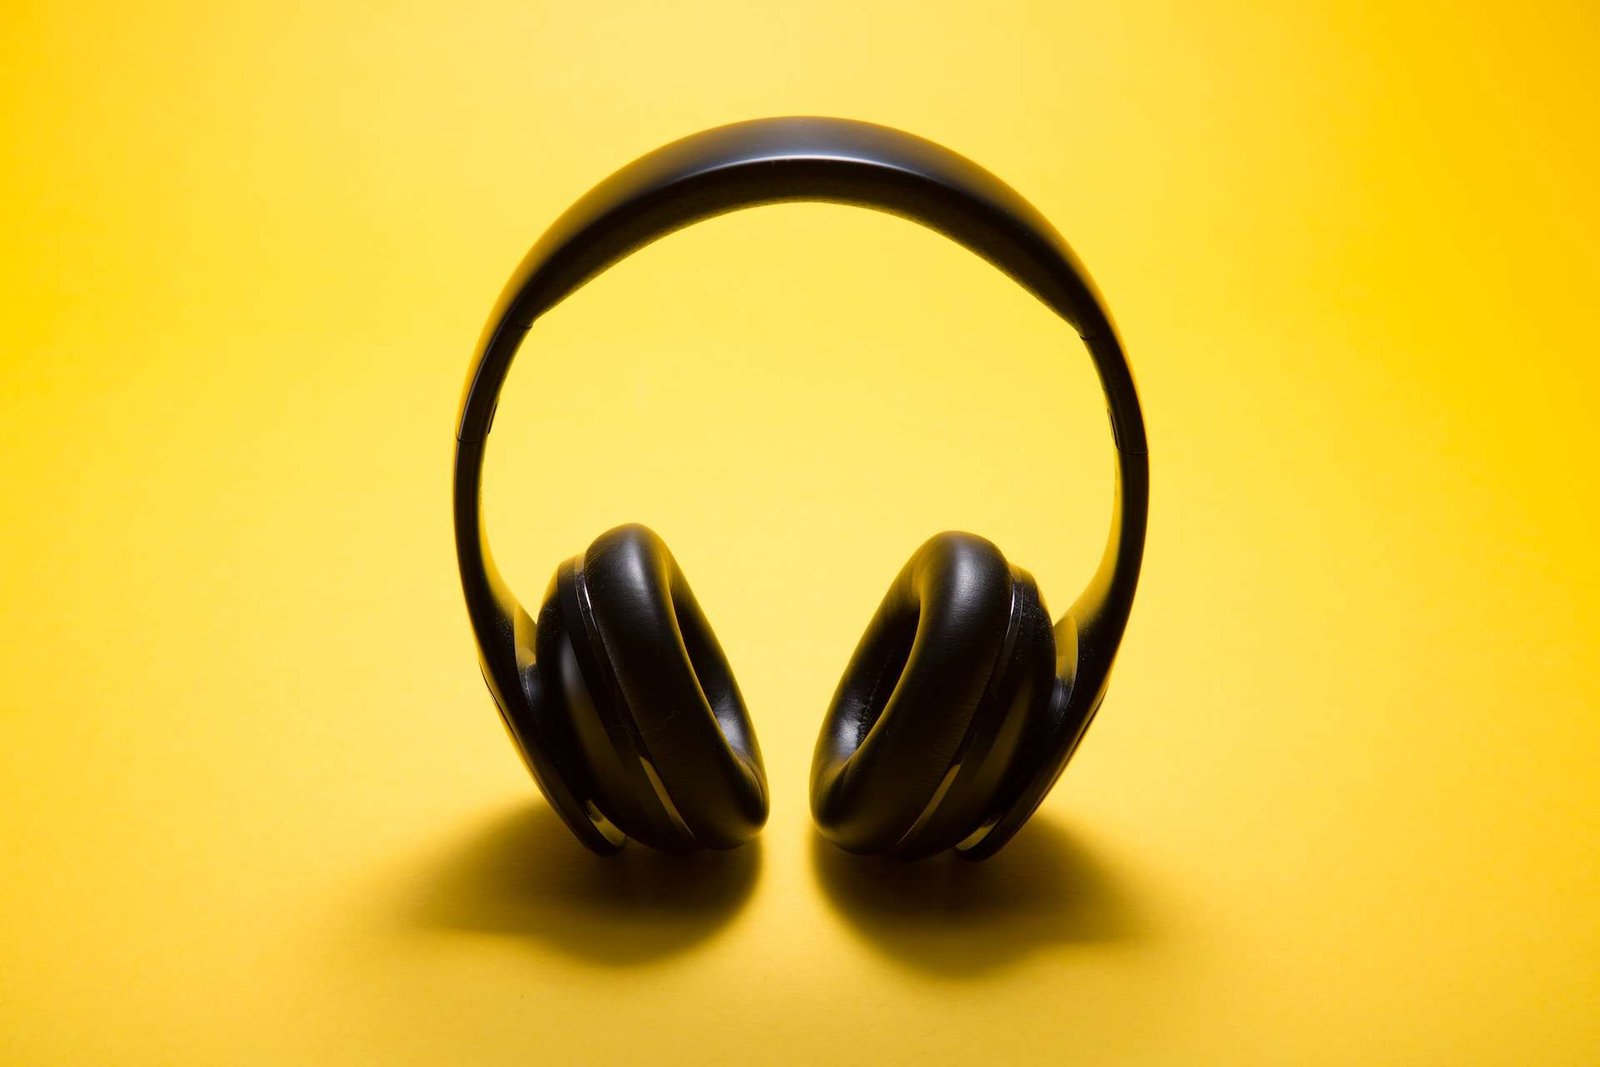 Black over ear headphones on yellow background